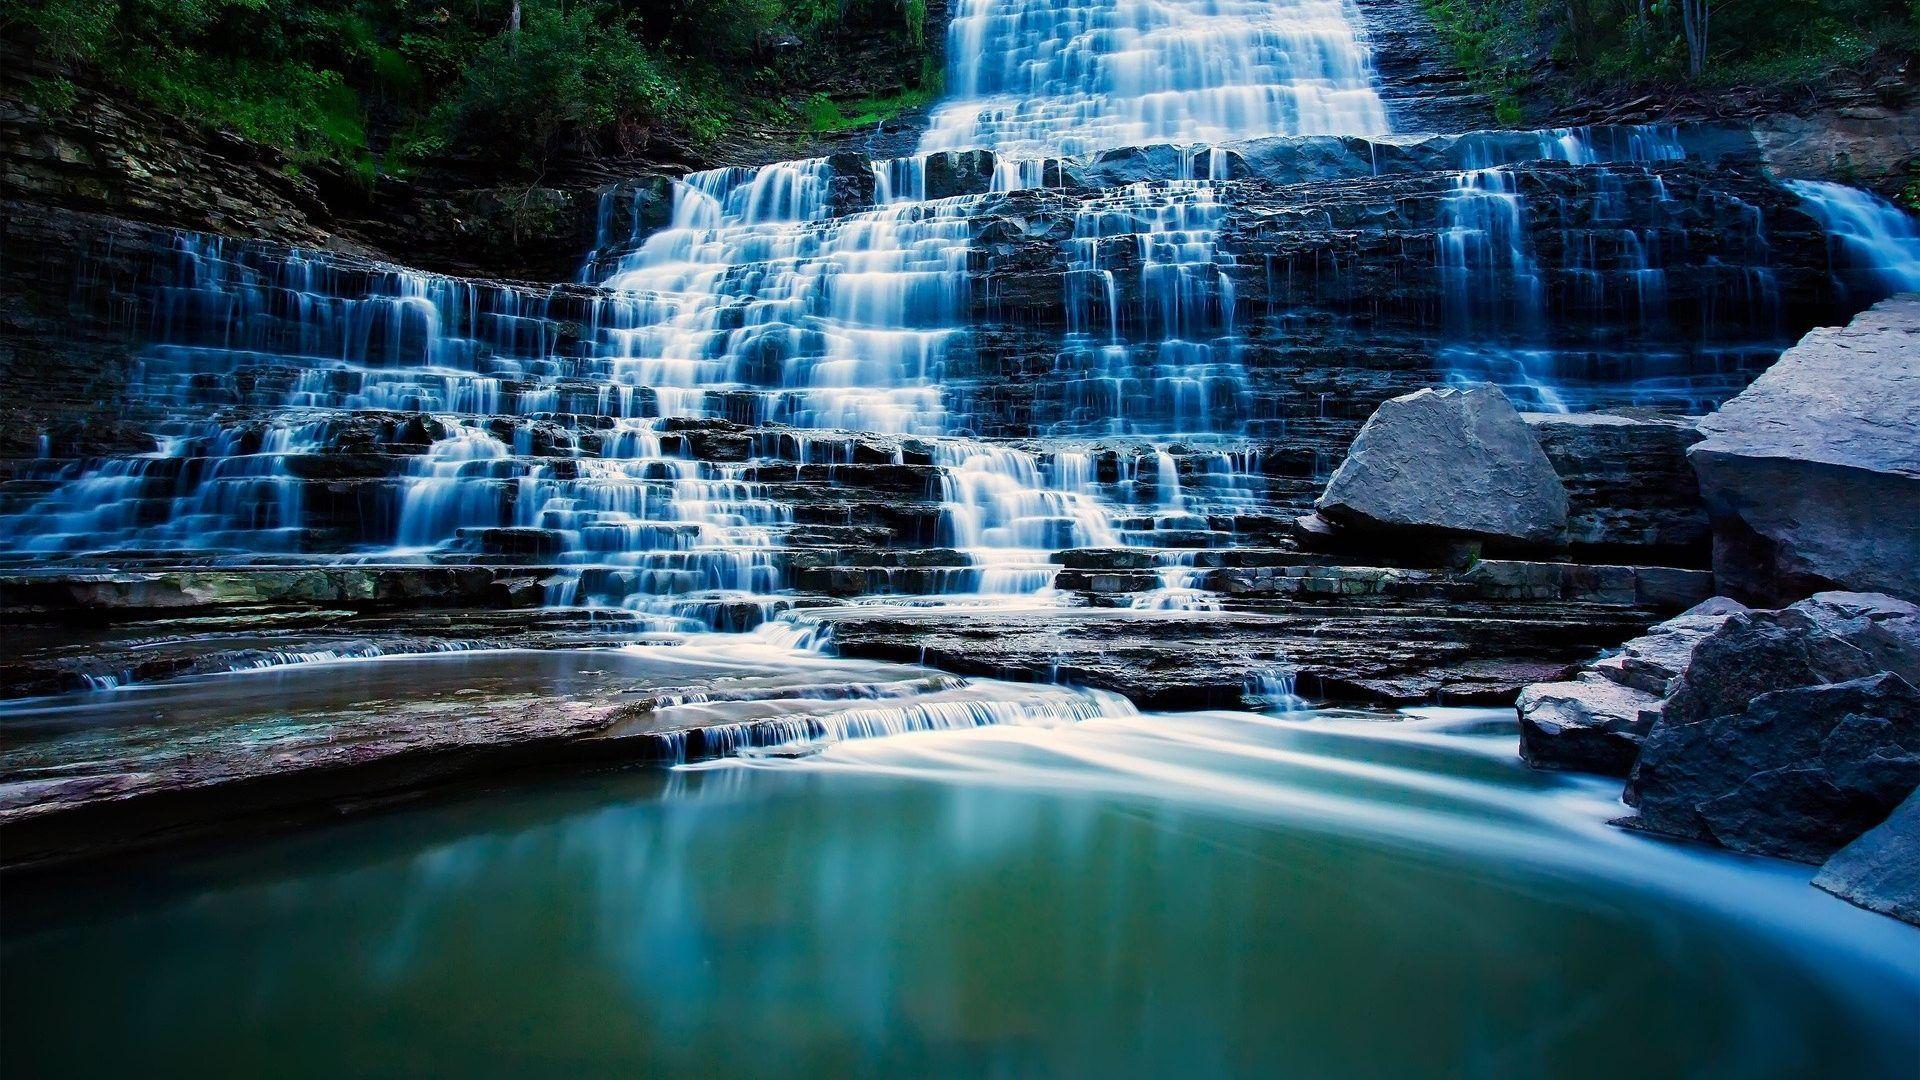 Waterfalls: Scenic Nature Waterfall Rivers Water Trees Rocks Shore